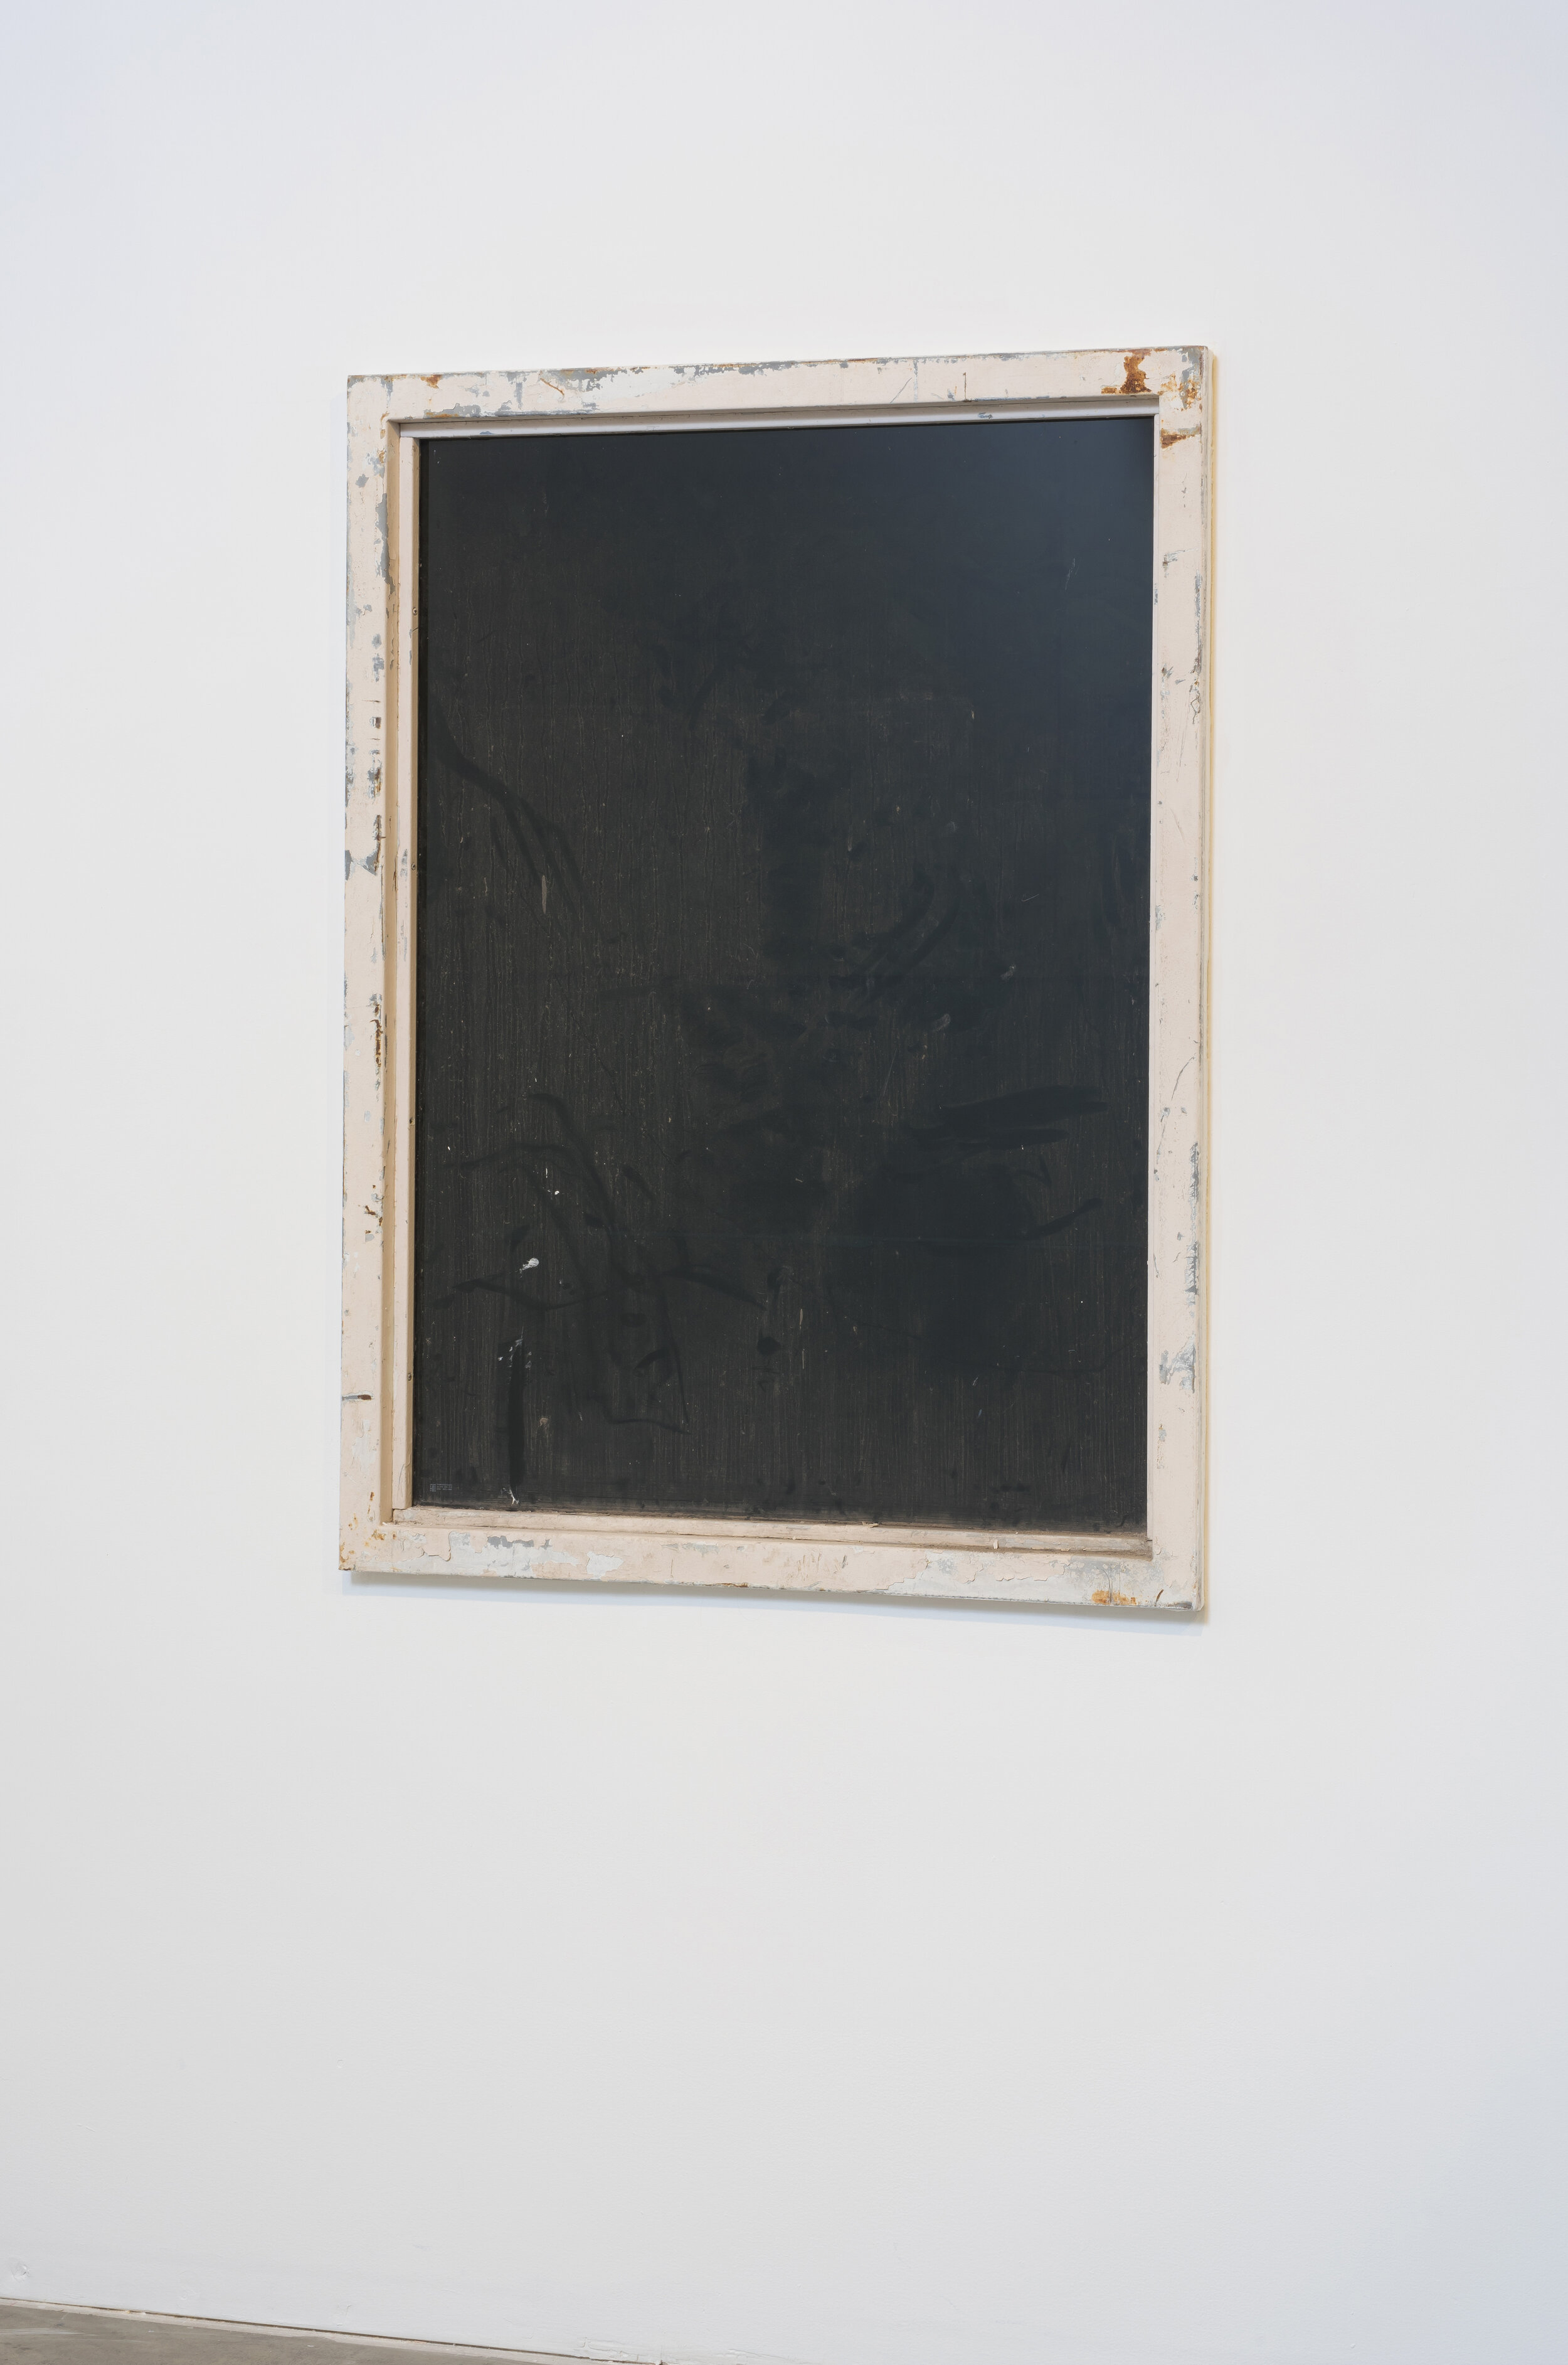   Uww (Untitled Window Work) , 2014. Mixed media. 52 x 40 inches 